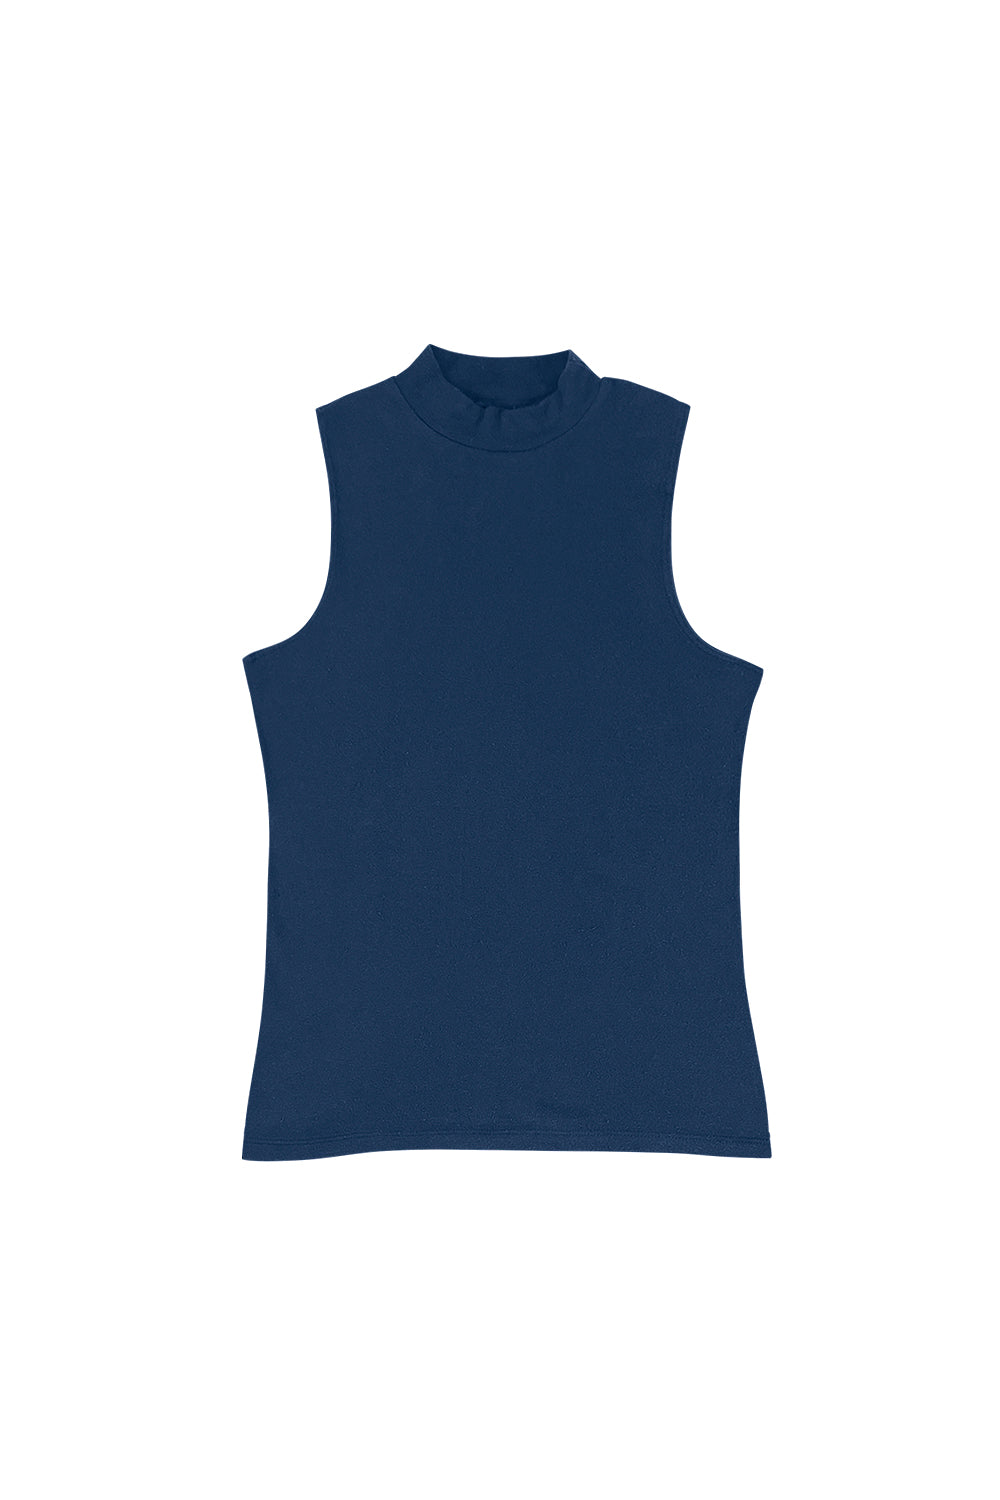 Mariposa Mock Shirt | Jungmaven Hemp Clothing & Accessories / Color: Navy